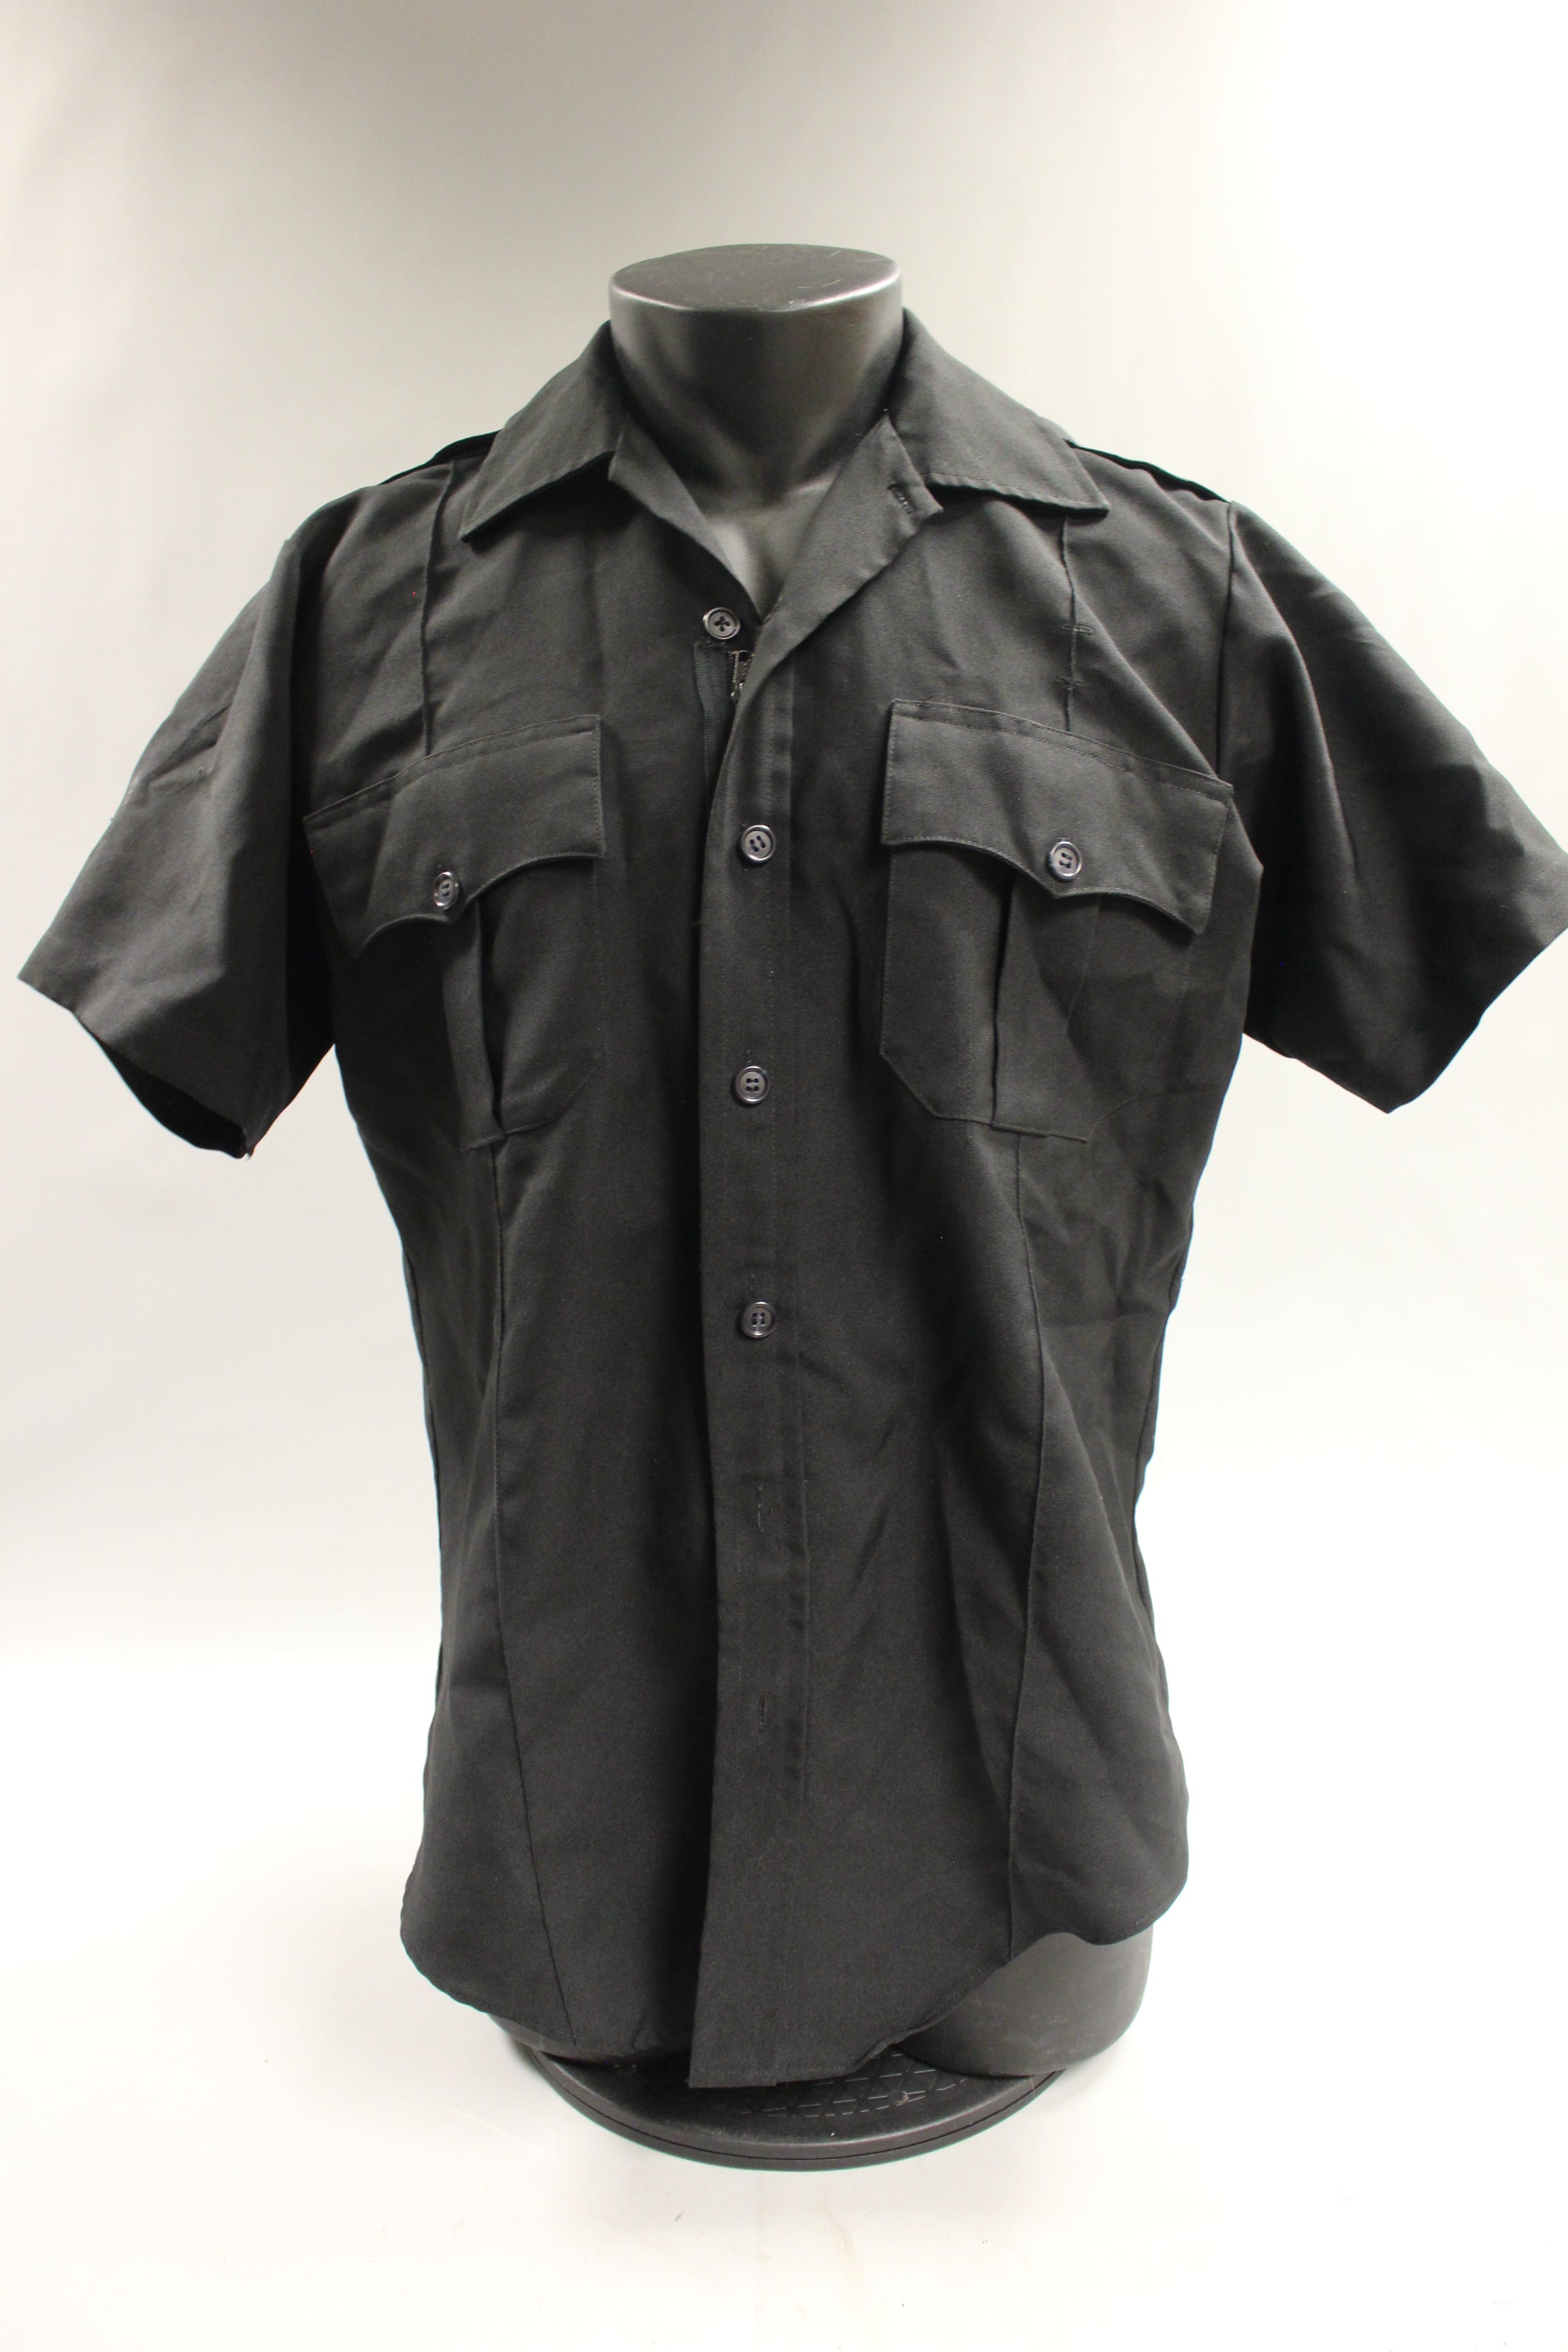 Southeastern Shirt Corp Code 9 Short Sleeve Men's Shirt - Black - Size: 16  SS - Used